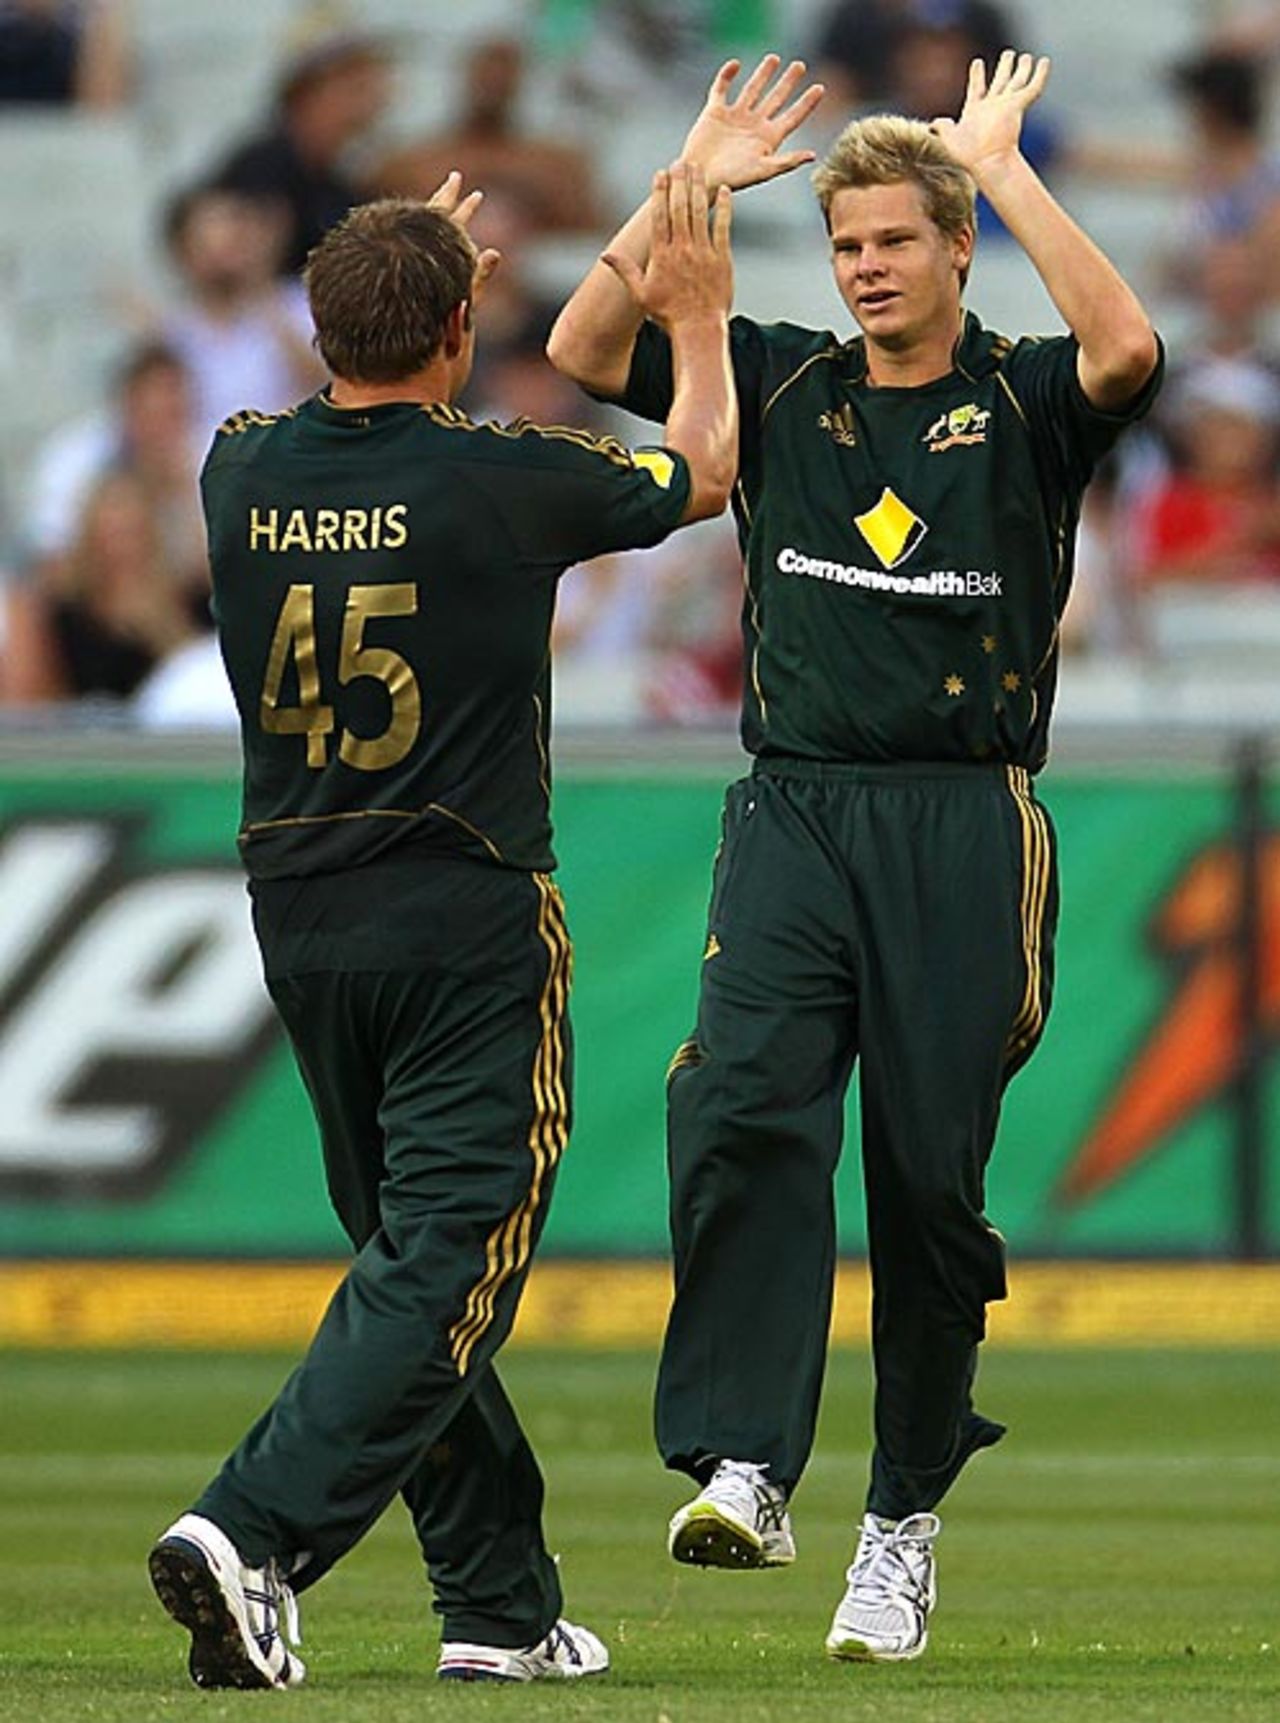 Steven Smith and Ryan Harris celebrate a wicket, Australia v West Indies, 5th ODI, Melbourne, 19 February, 2010